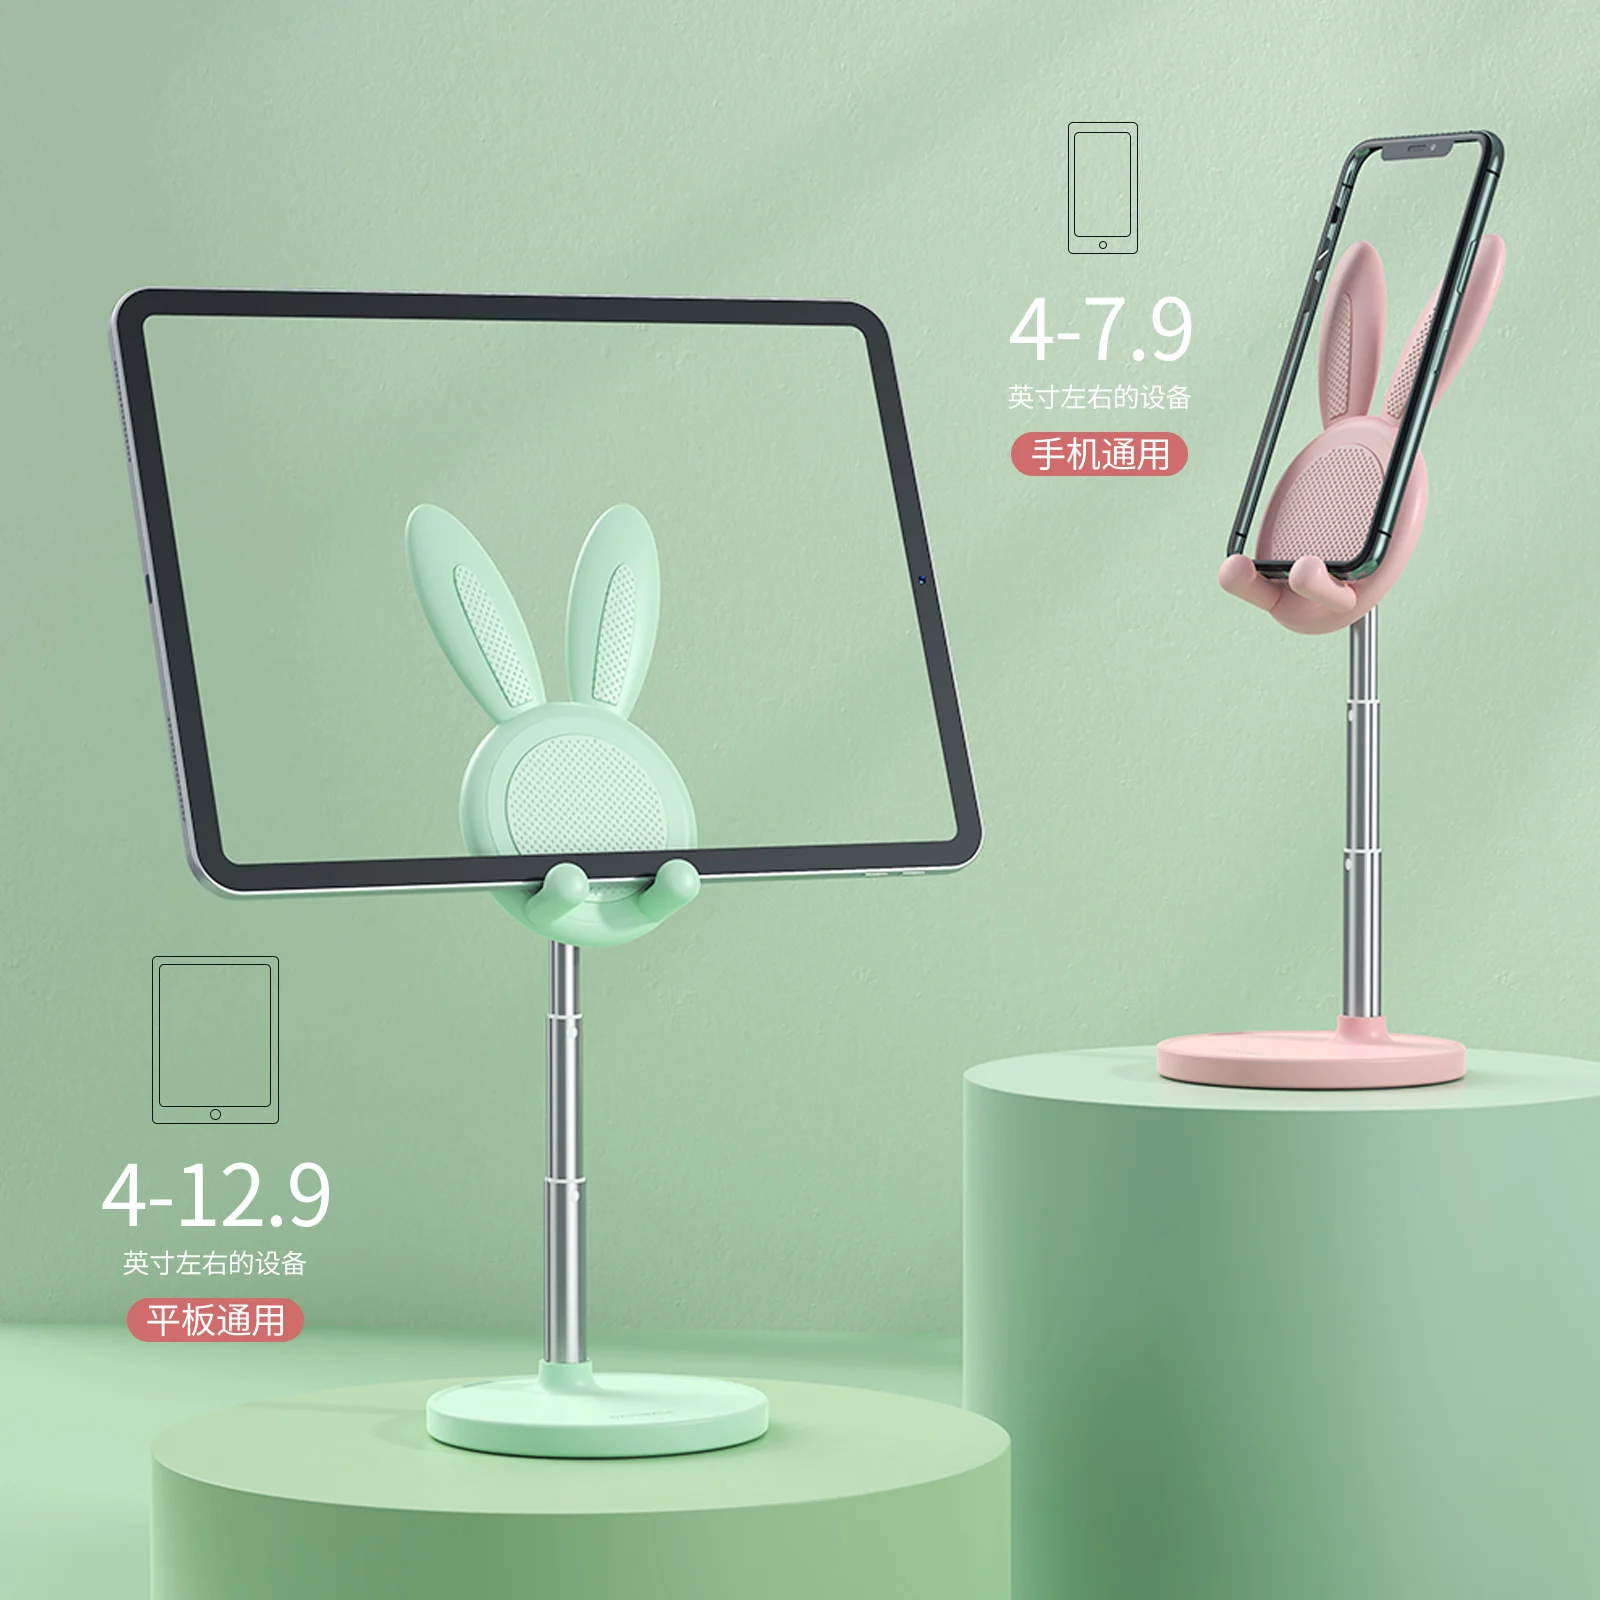 desktop telescopic phone stand holder cute bunny rabbit portable universal adjustable desk tablet bracket for easter gifts free global shipping